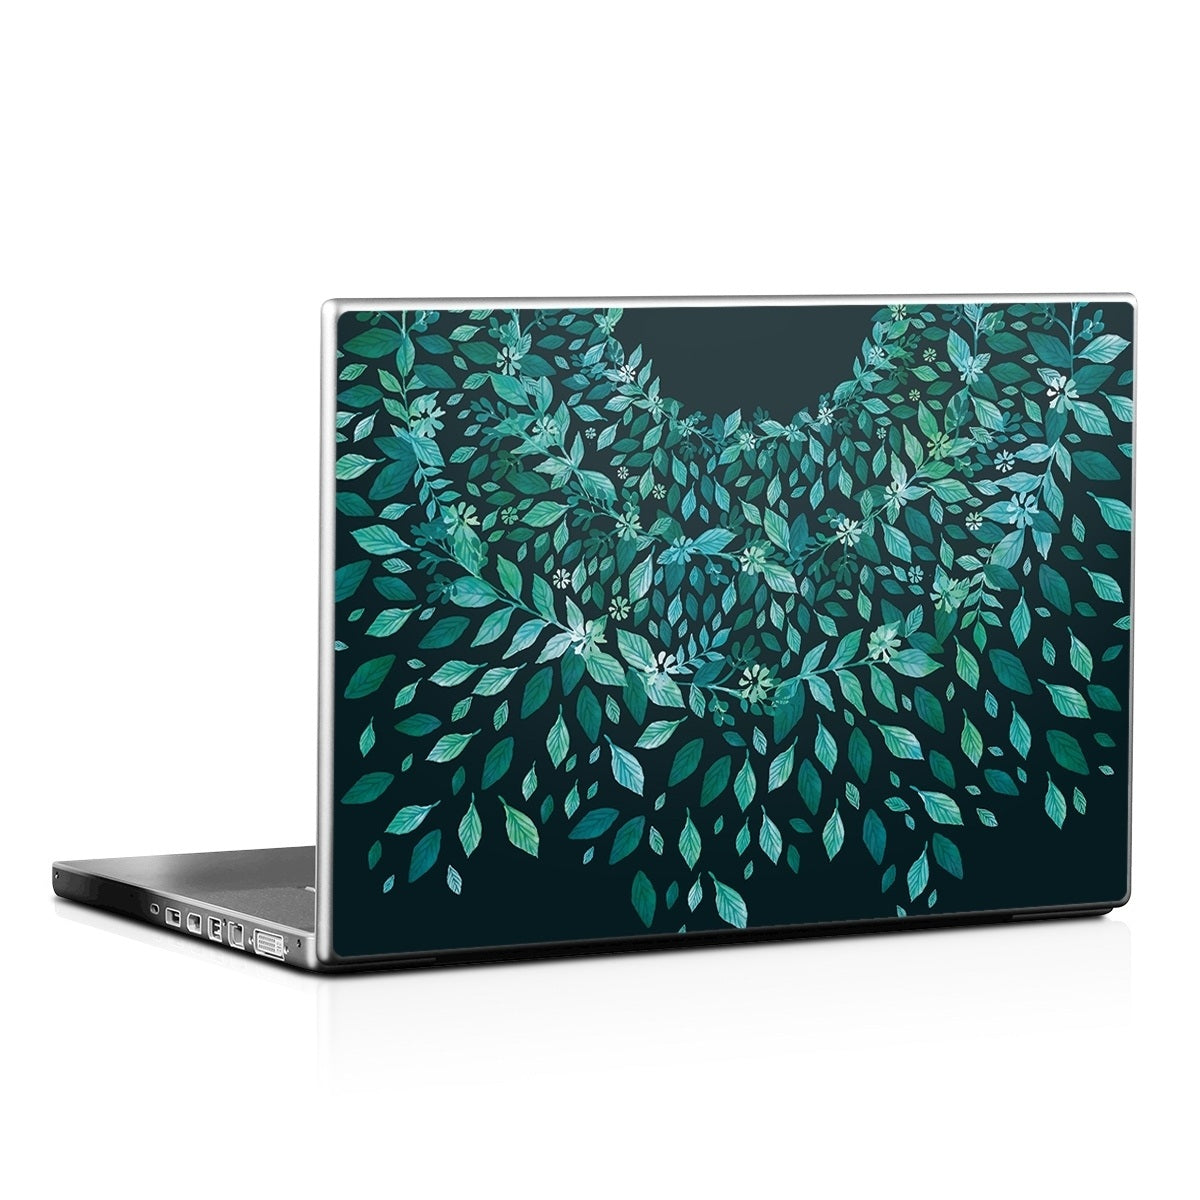 Growth - Laptop Lid Skin